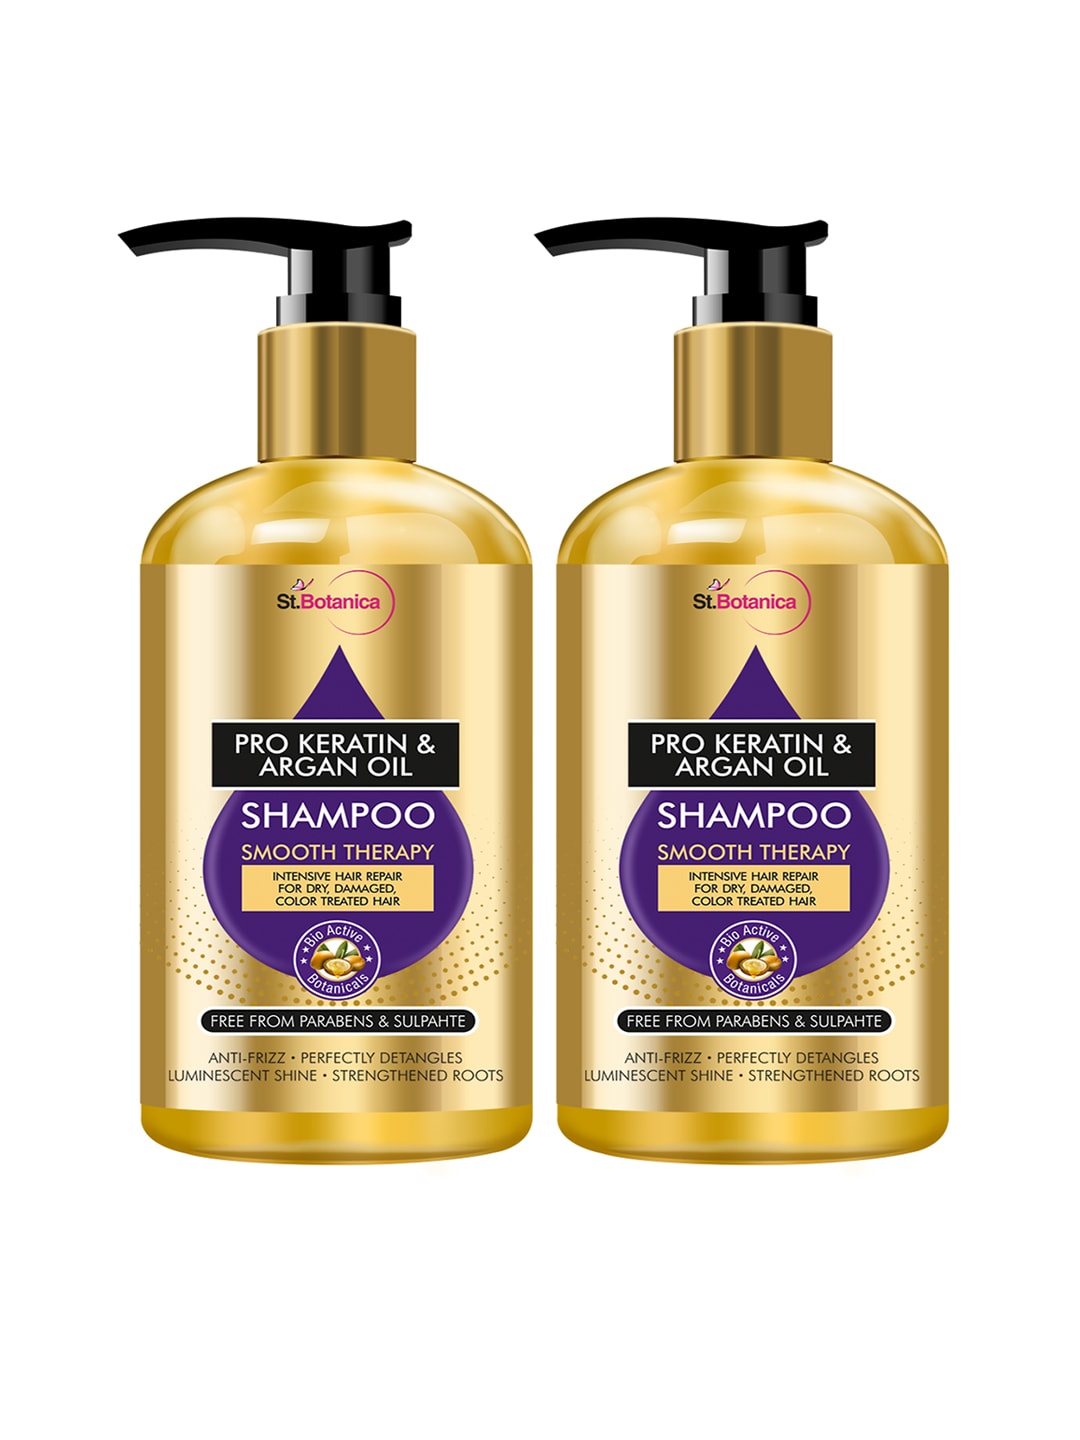 StBotanica Unisex 2 Pcs Pro Keratin & Argan Oil Smooth Therapy Shampoo 300ml each Price in India